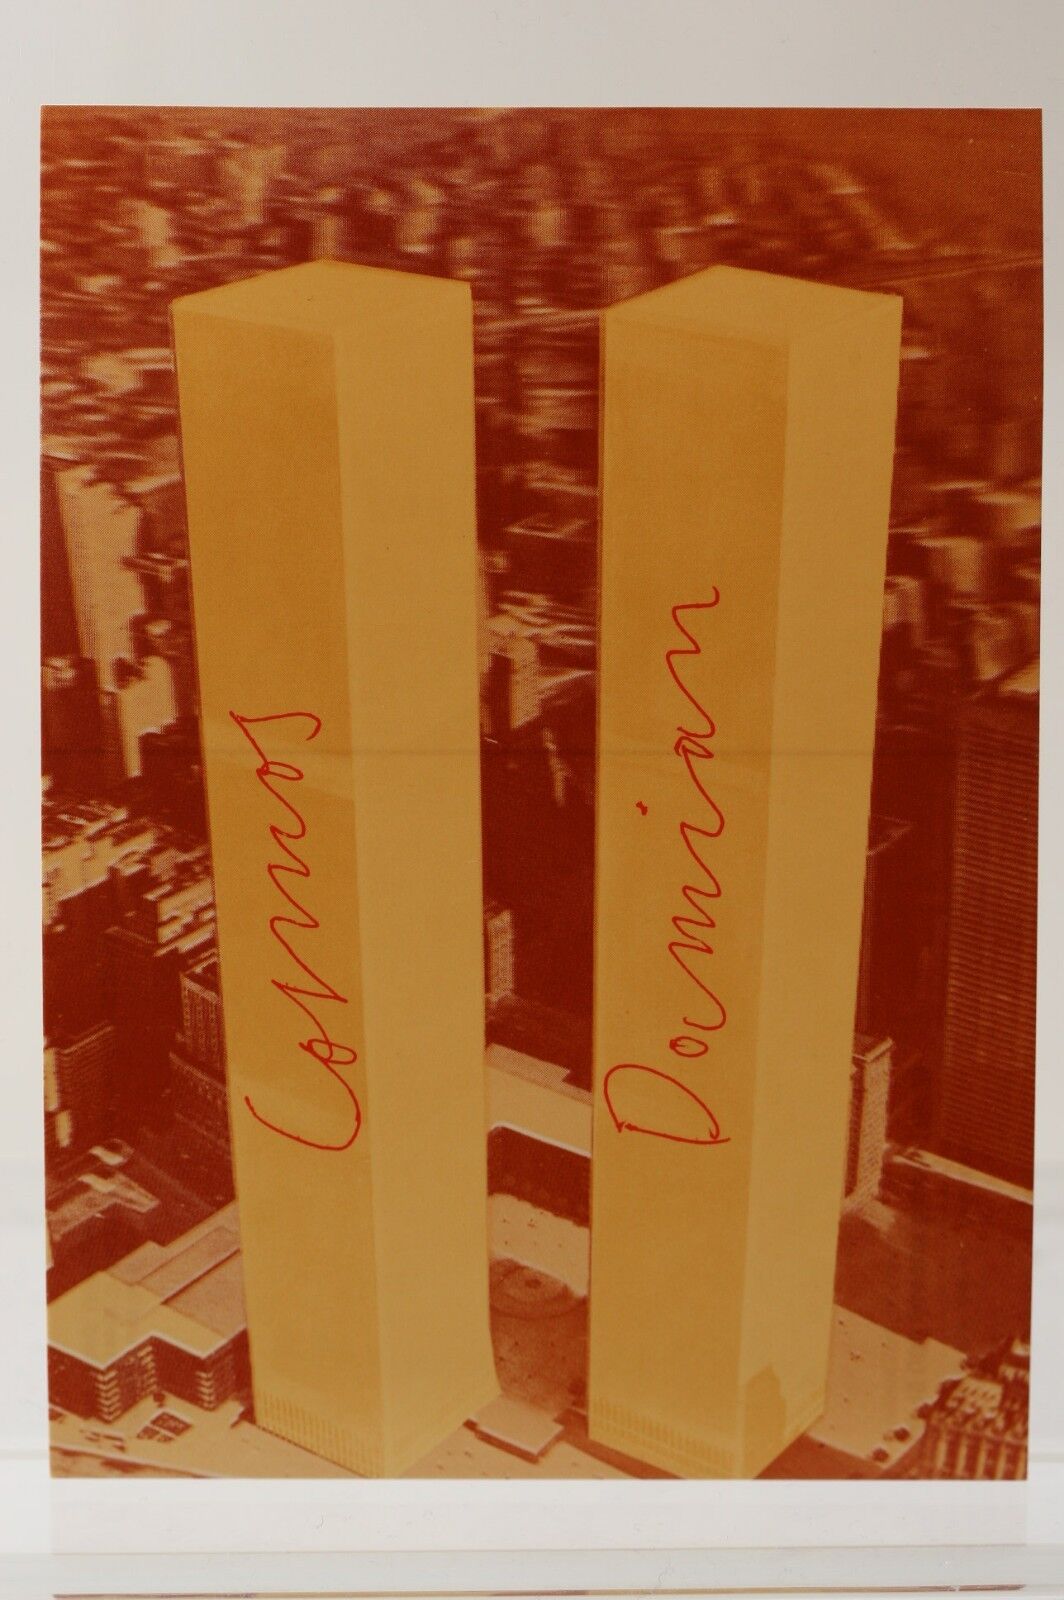 JOSEPH BEUYS: "The World Trade Center" 1973 rare Art-Postcard  NEW